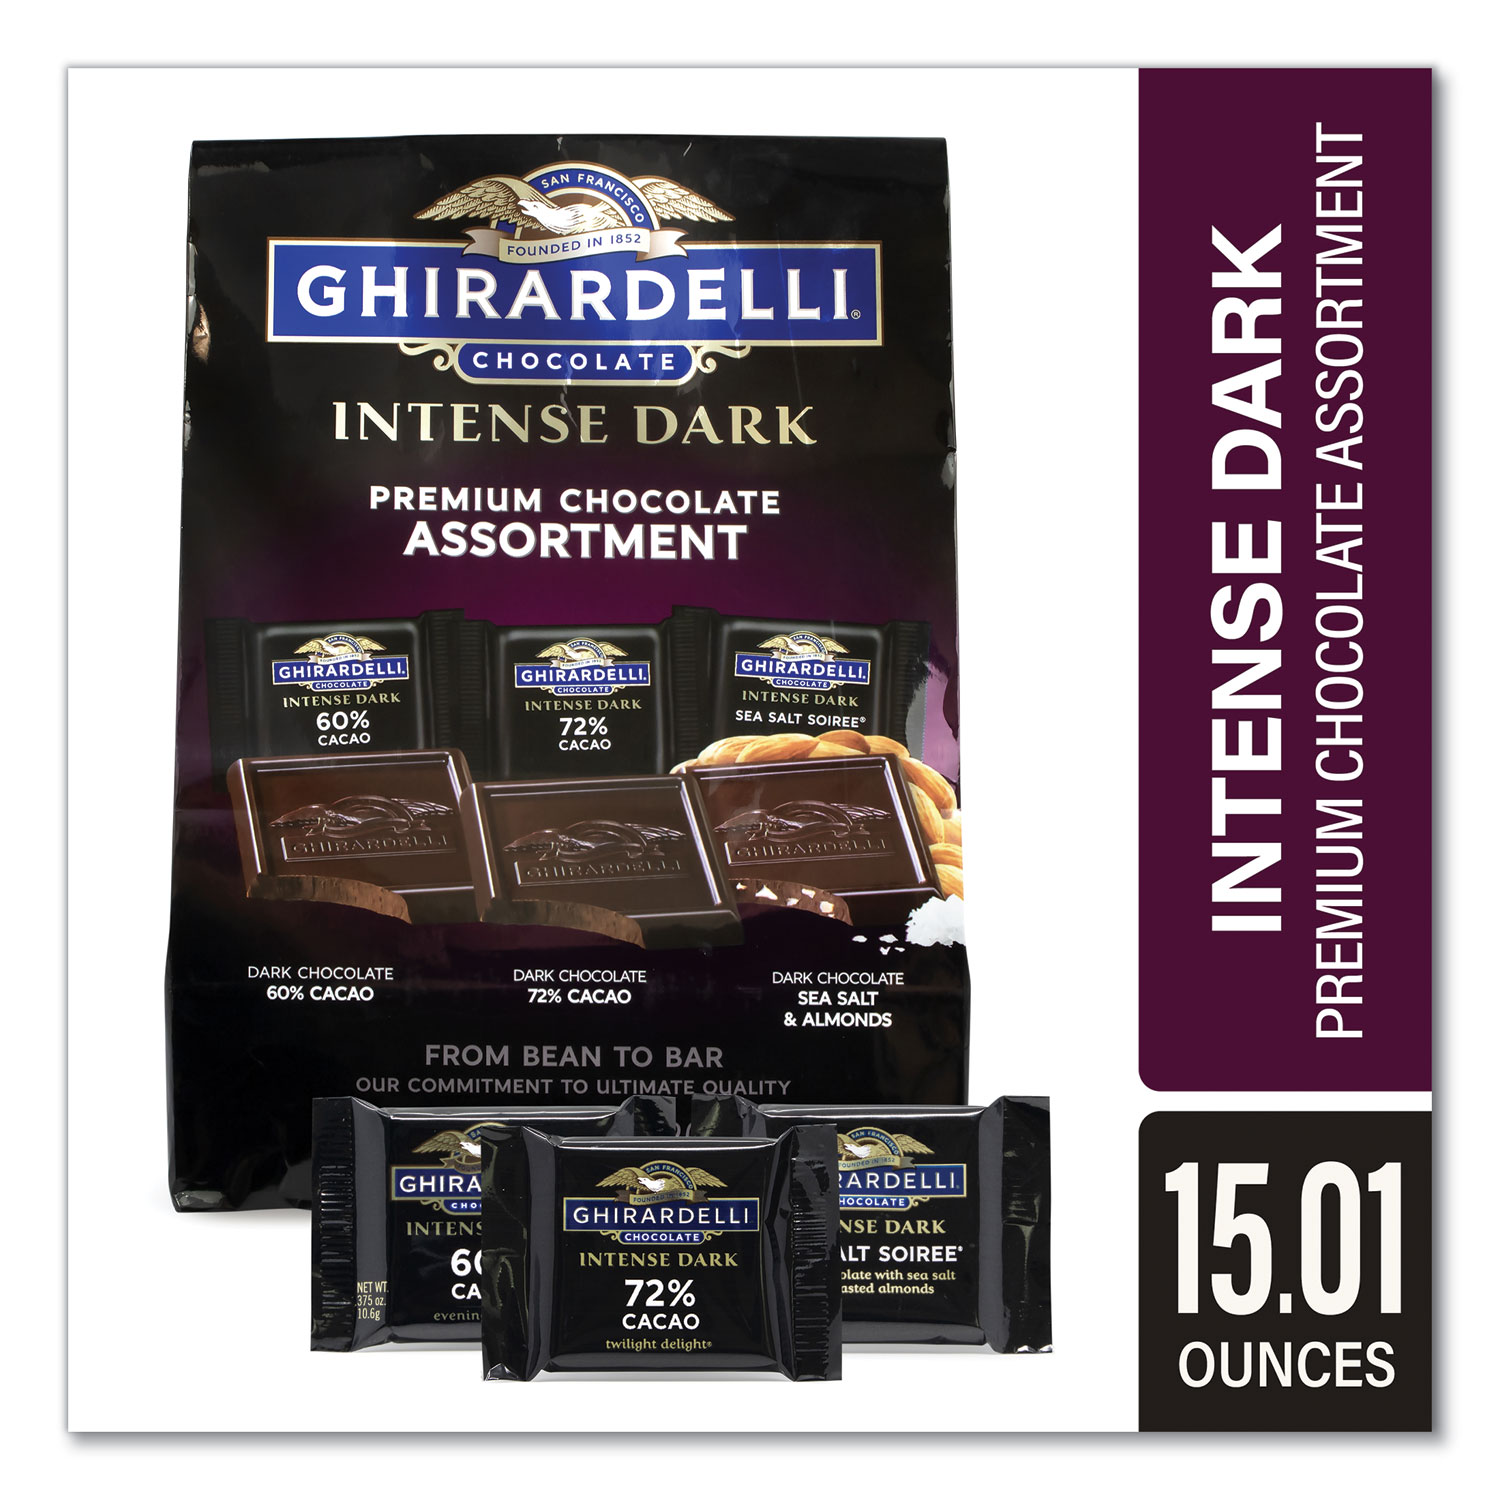  Ghirardelli 31534 Intense Dark Chocolate Premium Collection, 15.01 oz Bag, Free Delivery in 1-4 Business Days (GRR22001102) 